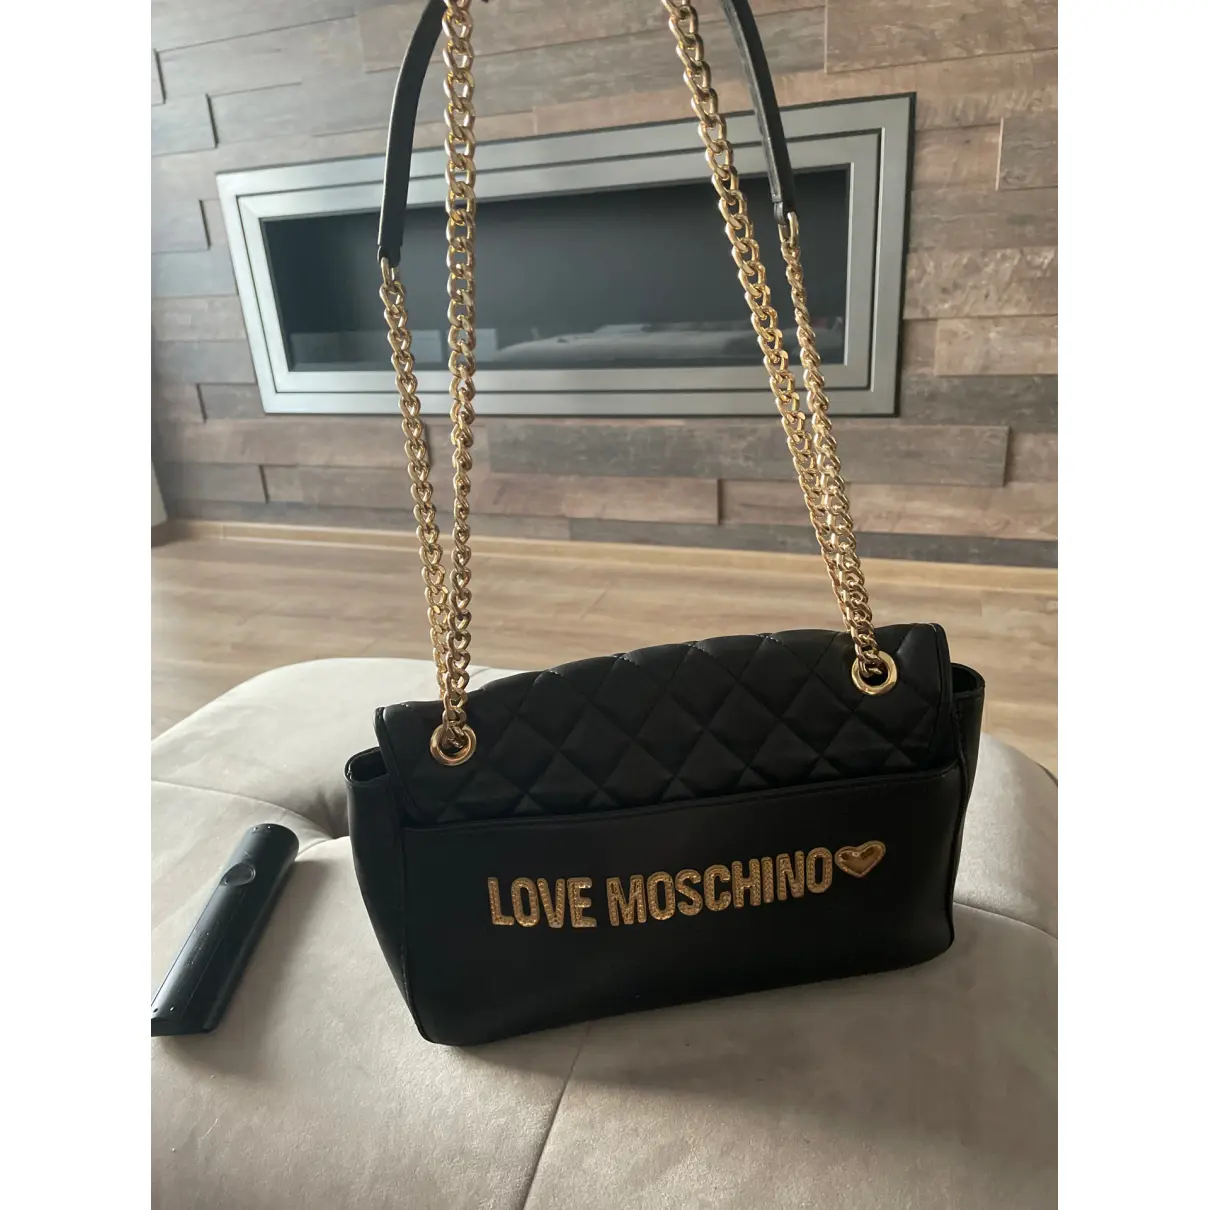 Buy Moschino Love Vegan leather handbag online